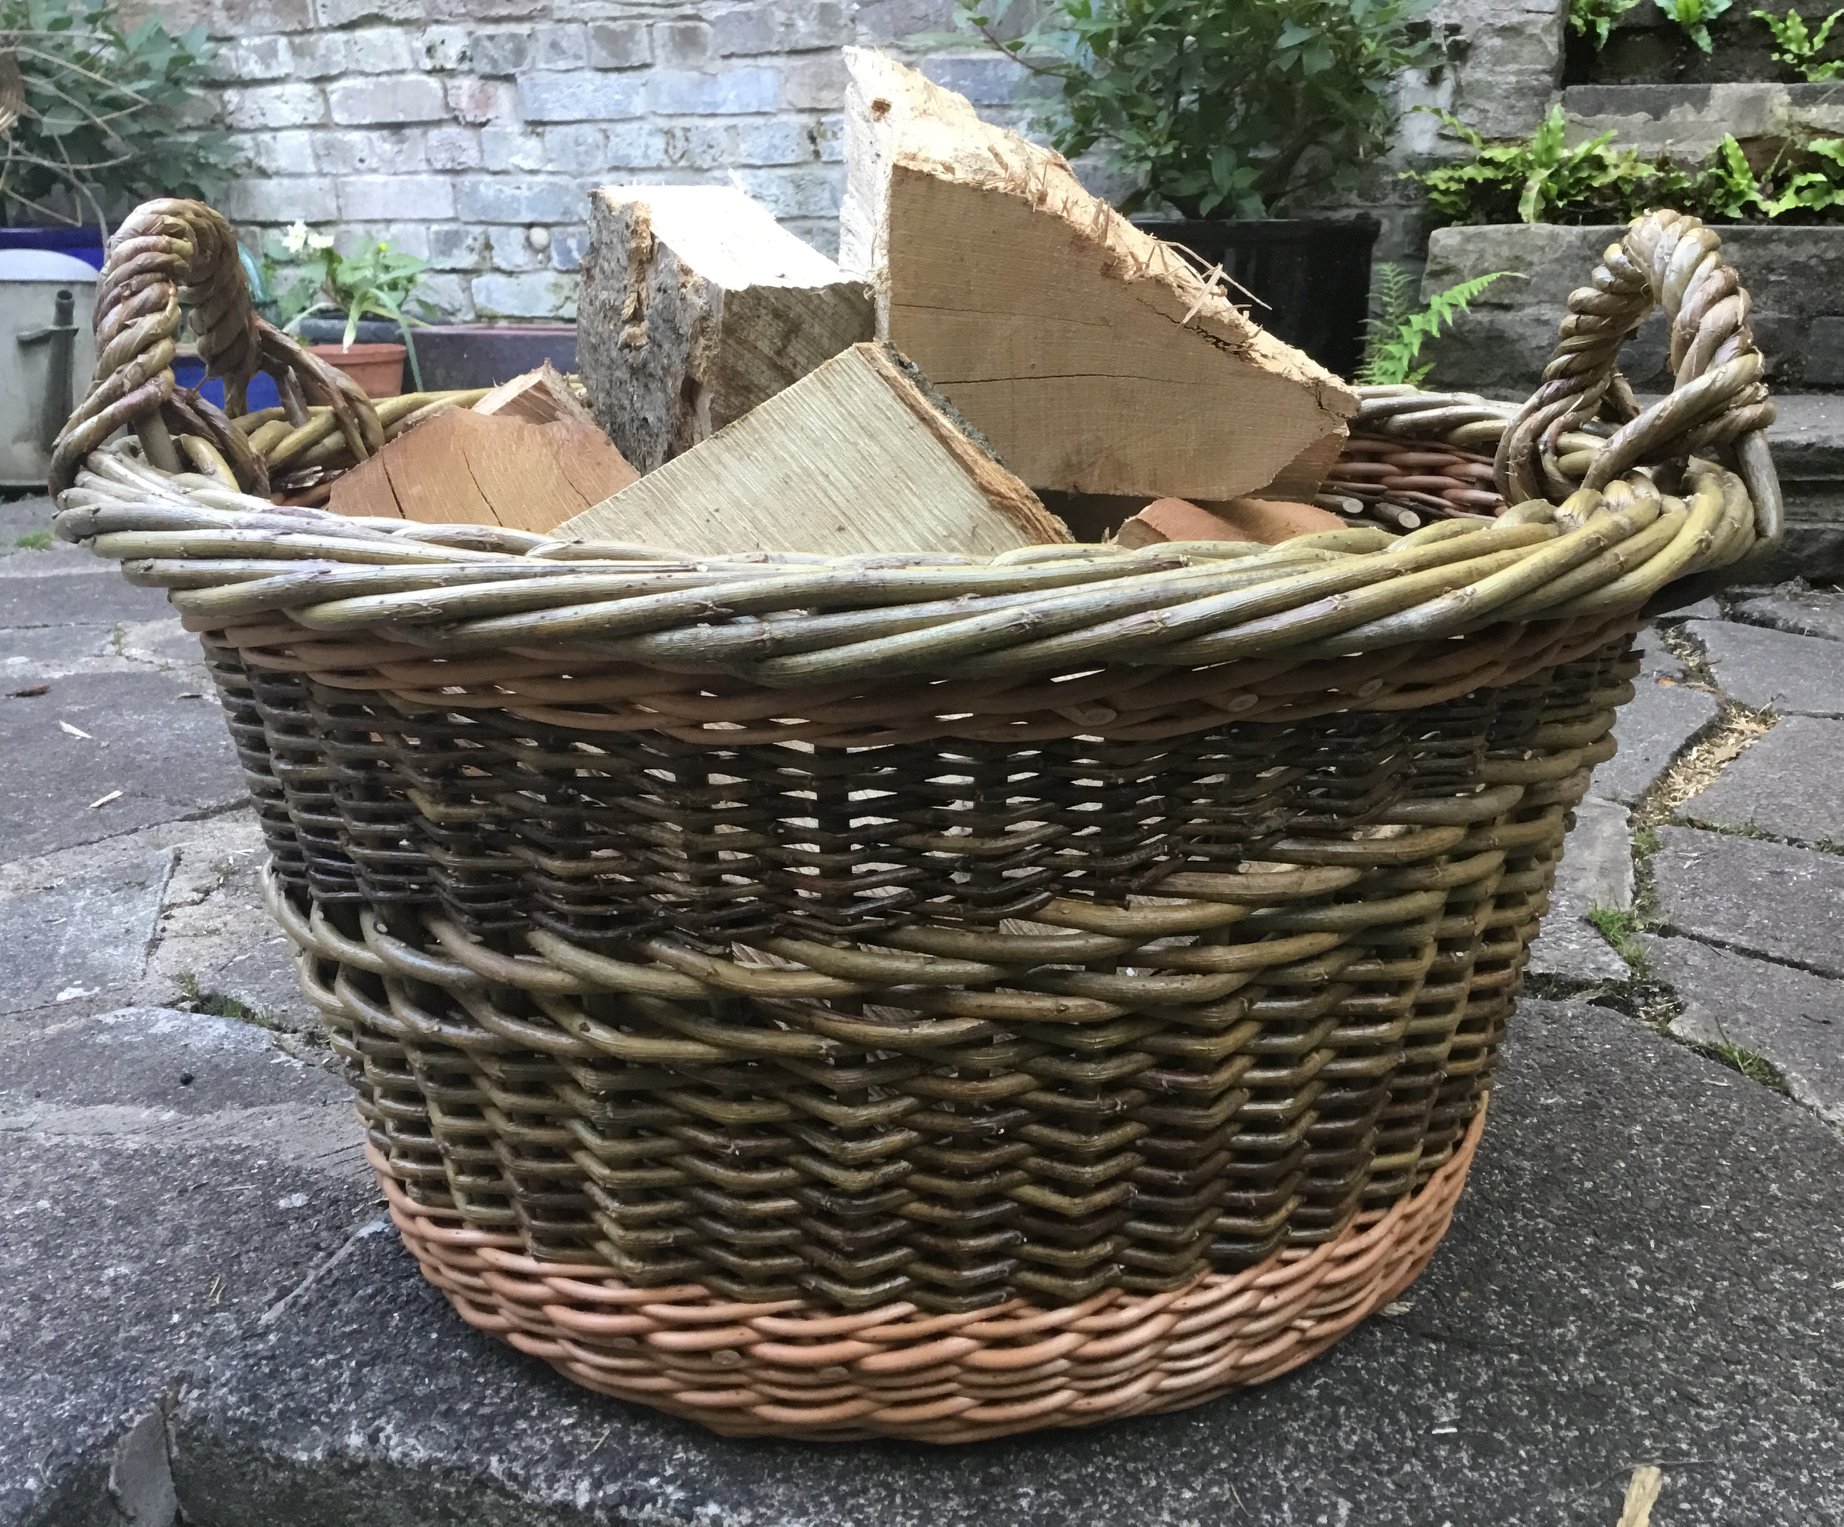 Willow log basket workshop – for experienced weavers